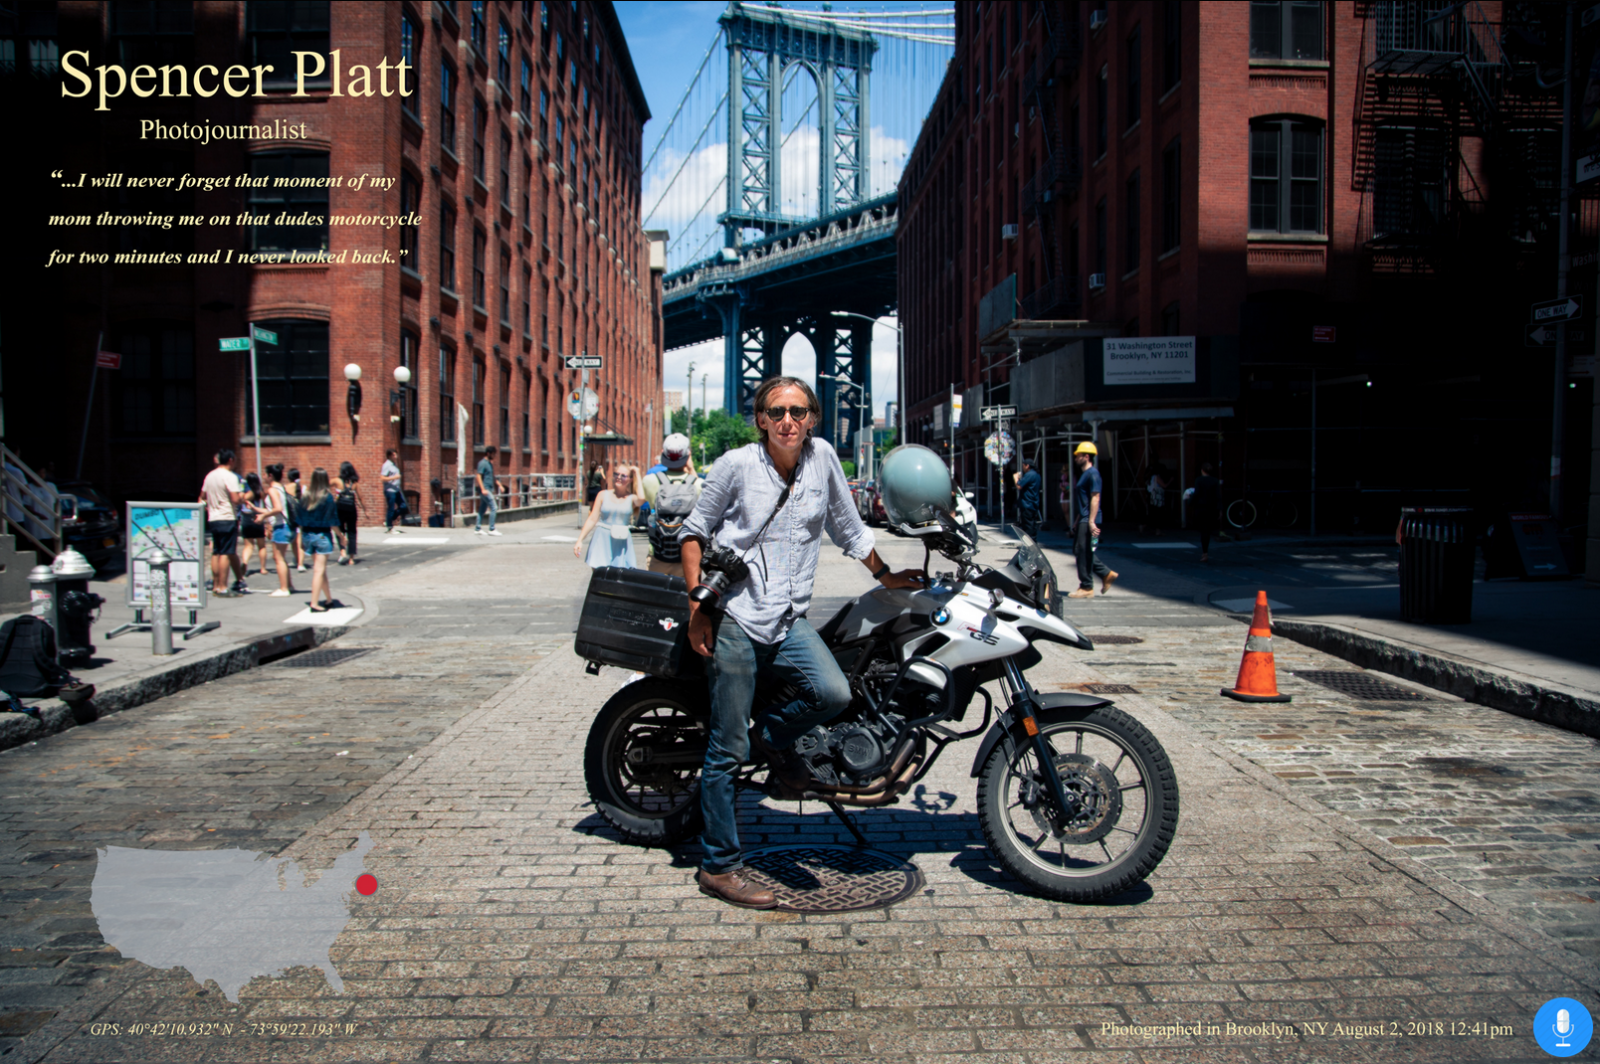 Hear Spencer Platt in The Motorcycle Portraits